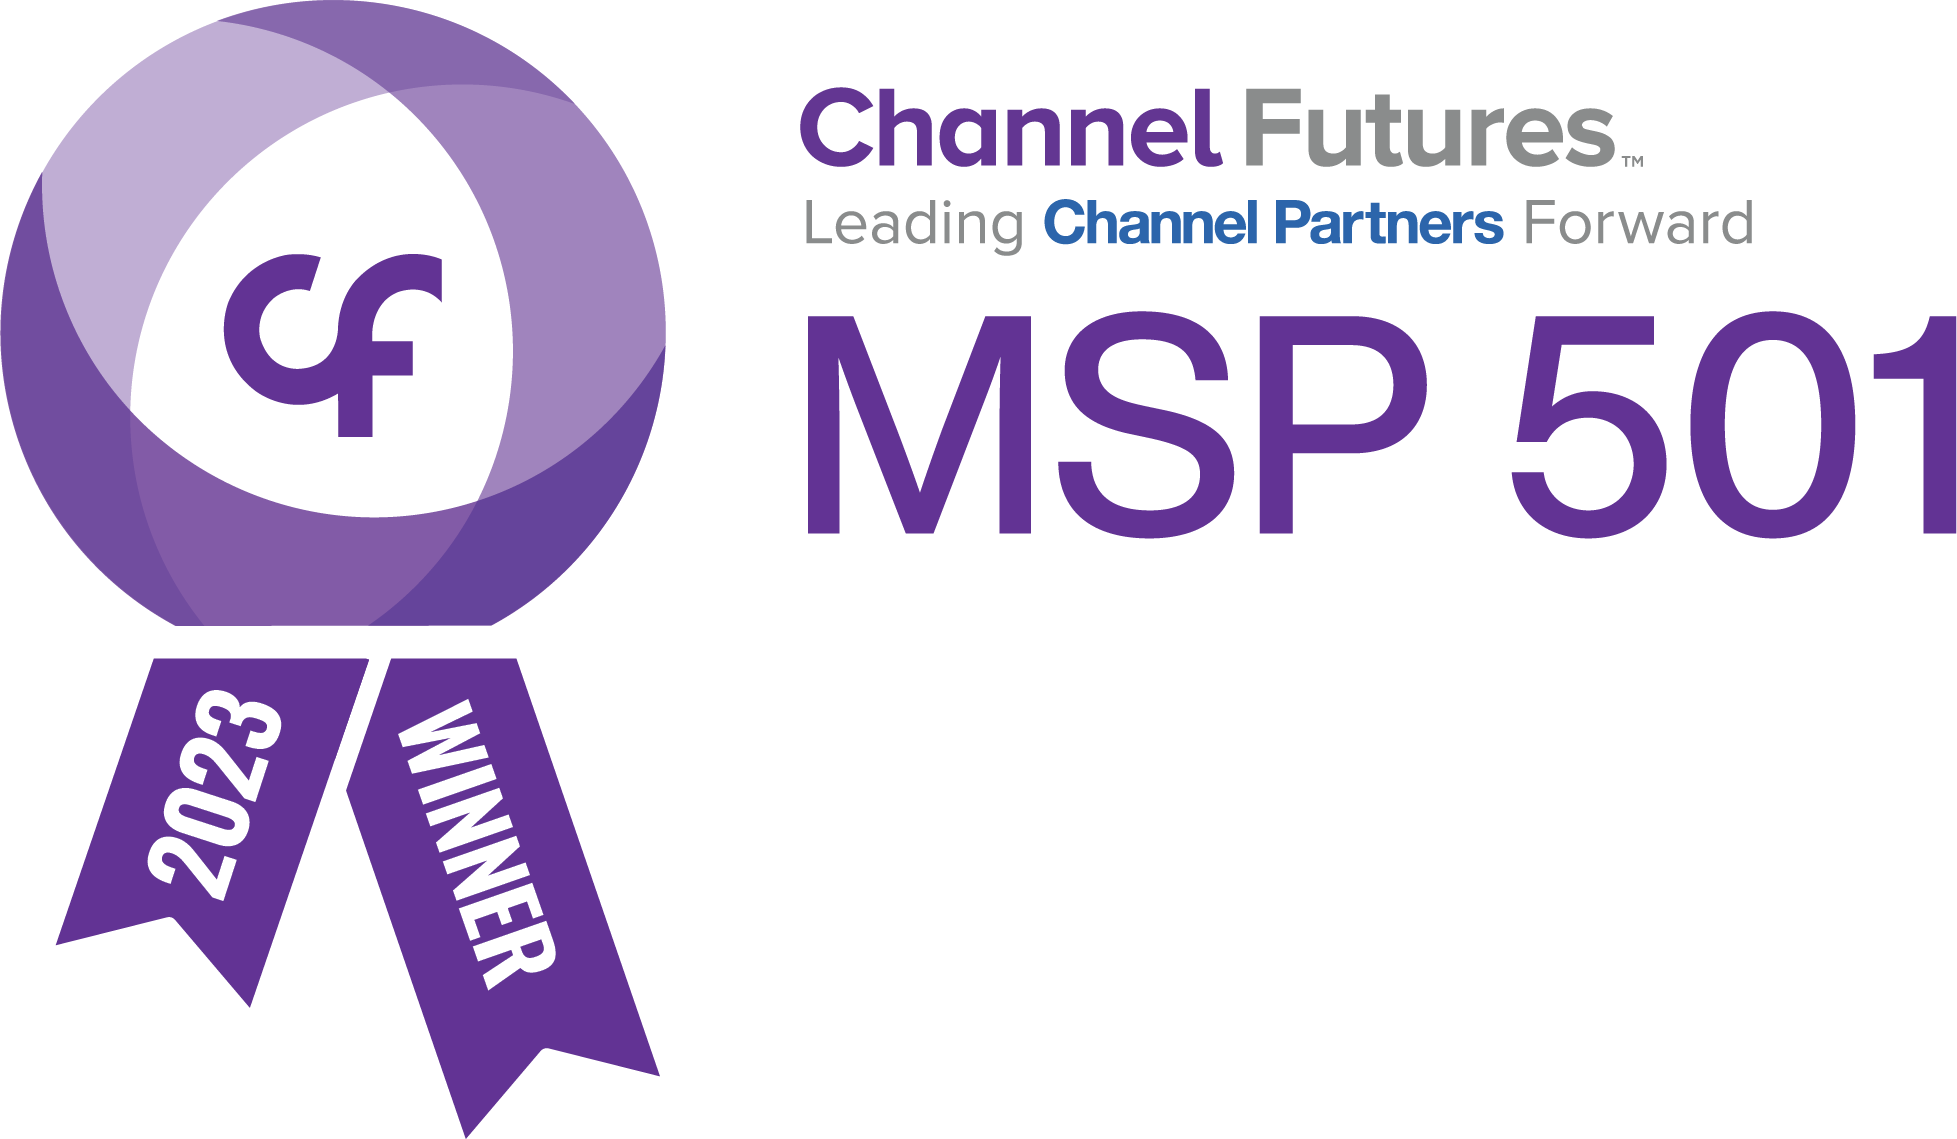 MSP 501 logo color-1